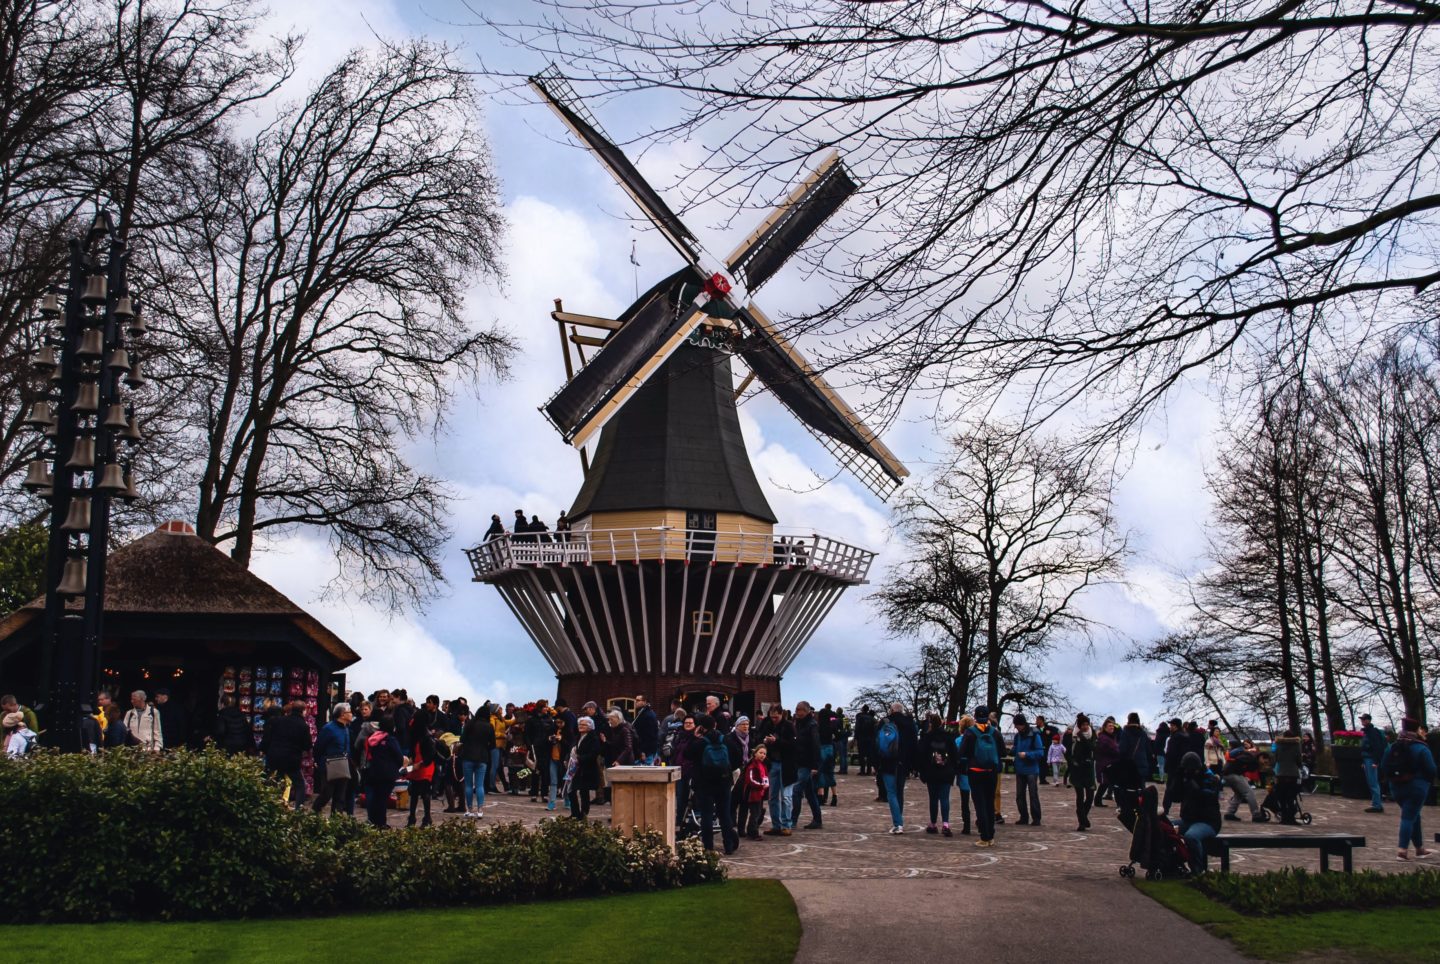 The windmill at Keukenhof